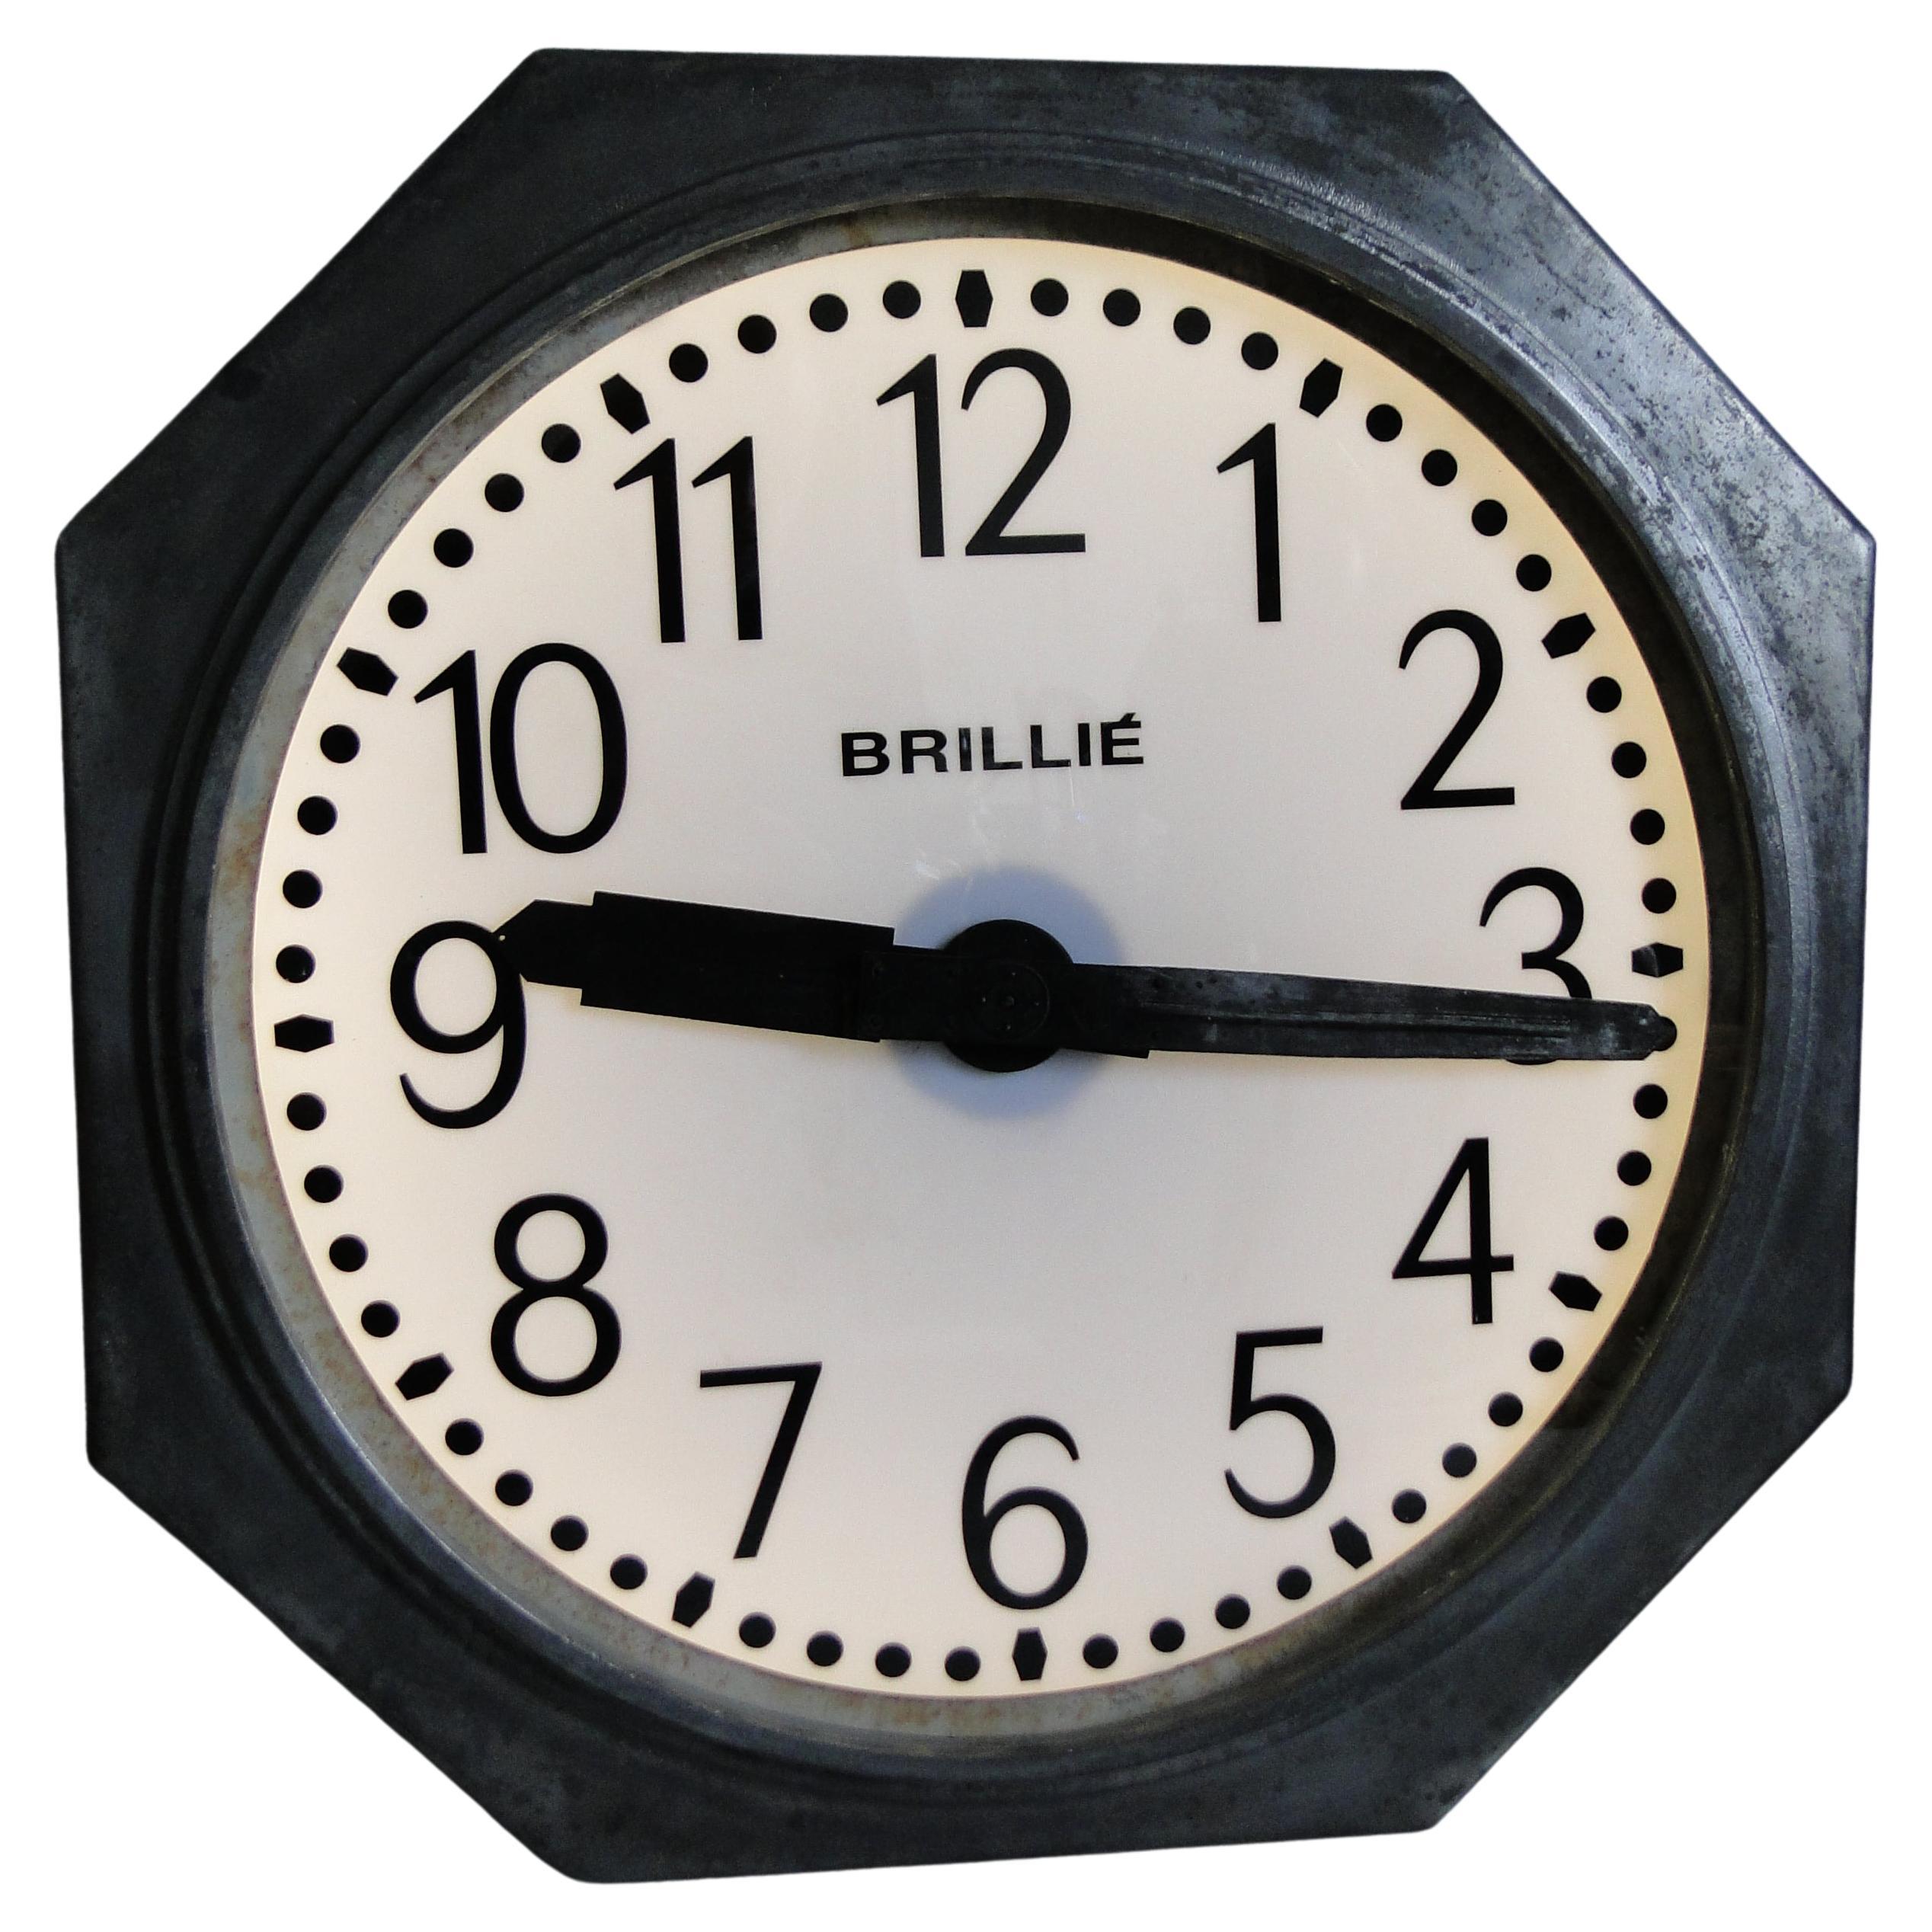 Vintage French Brillie Station Railway Clock Factory Industrial, Paris, France